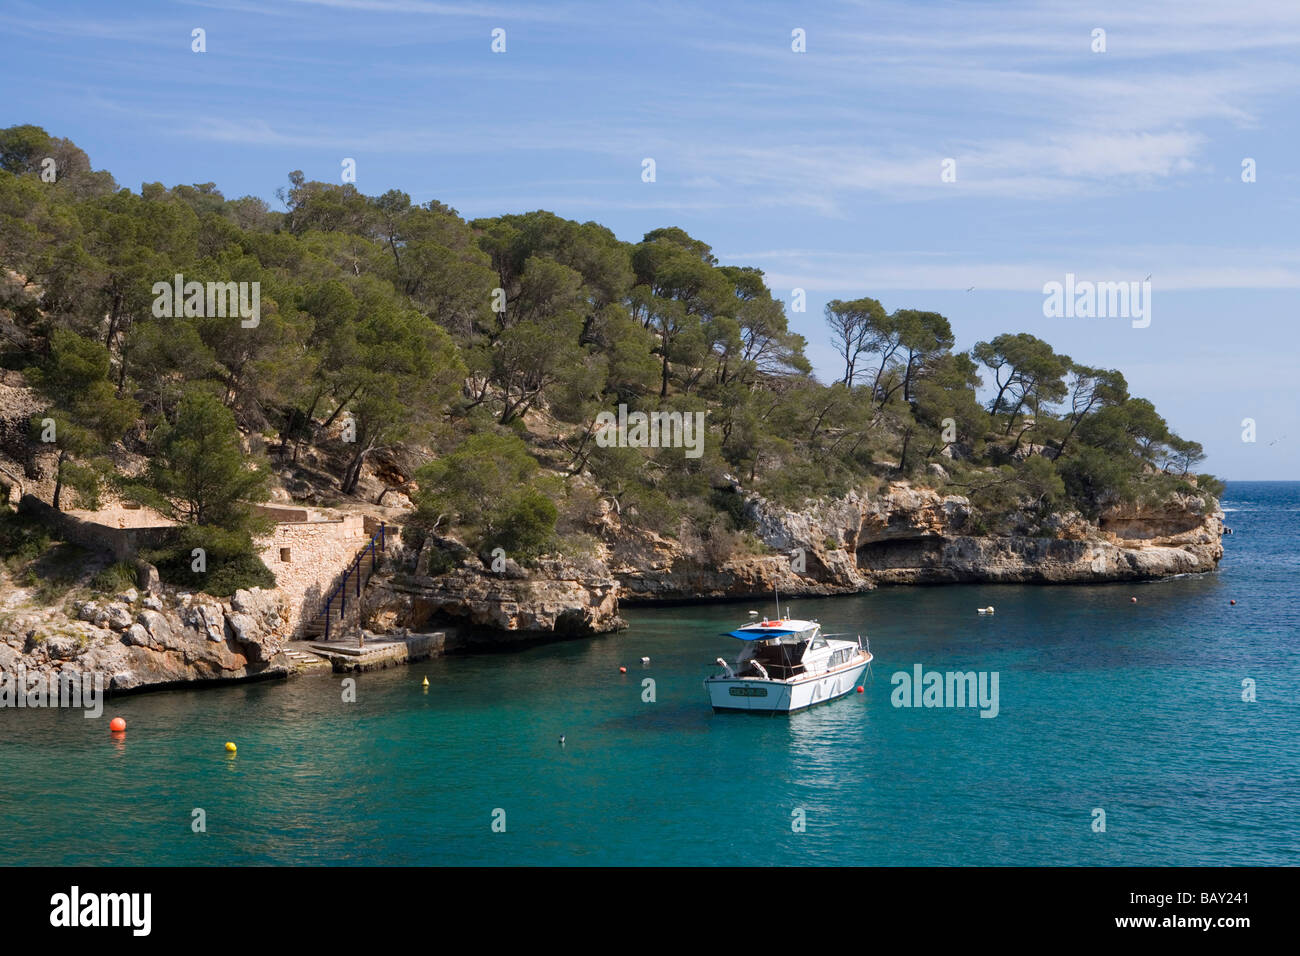 Pleasure Boat at Cala Figuera Cove, Cala Figuera, Mallorca, Balearic Islands, Spain Stock Photo